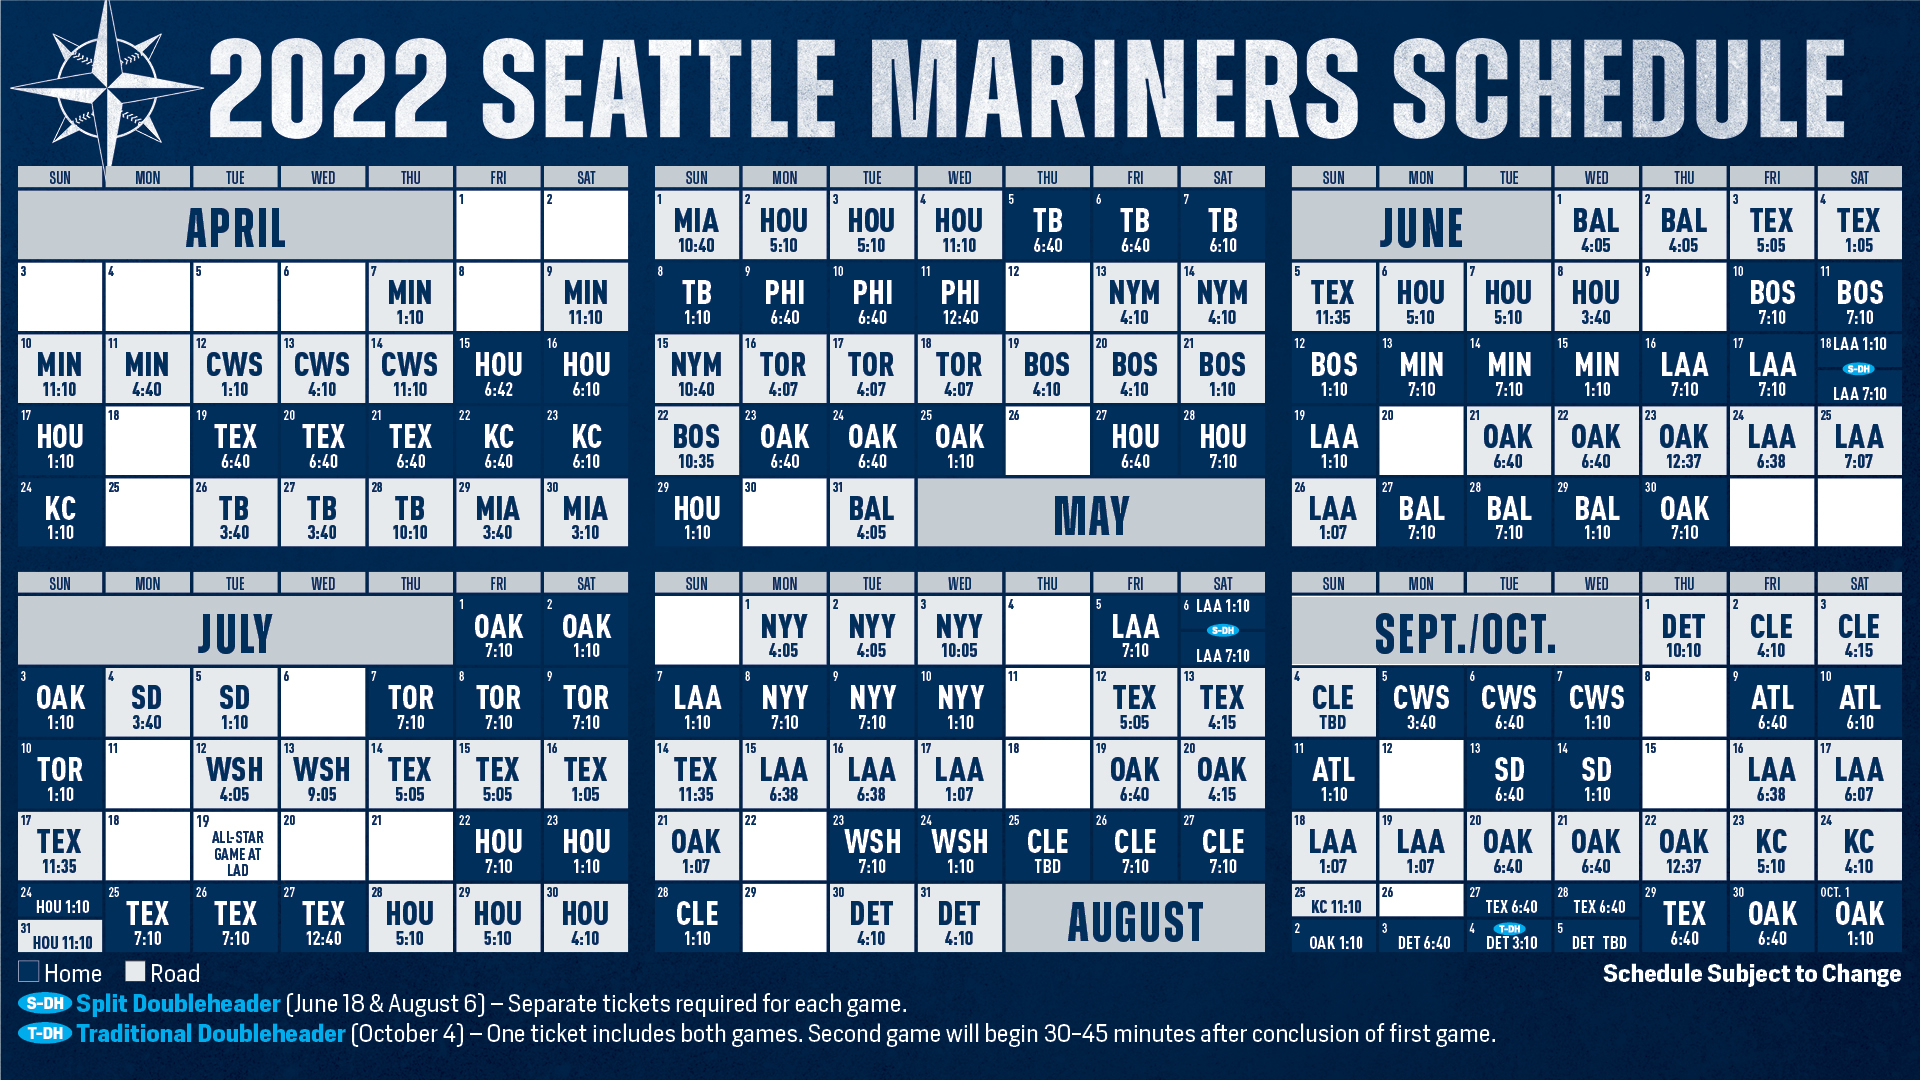 Seattle Mariners on Twitter "AccessMariners All singlegame ticket